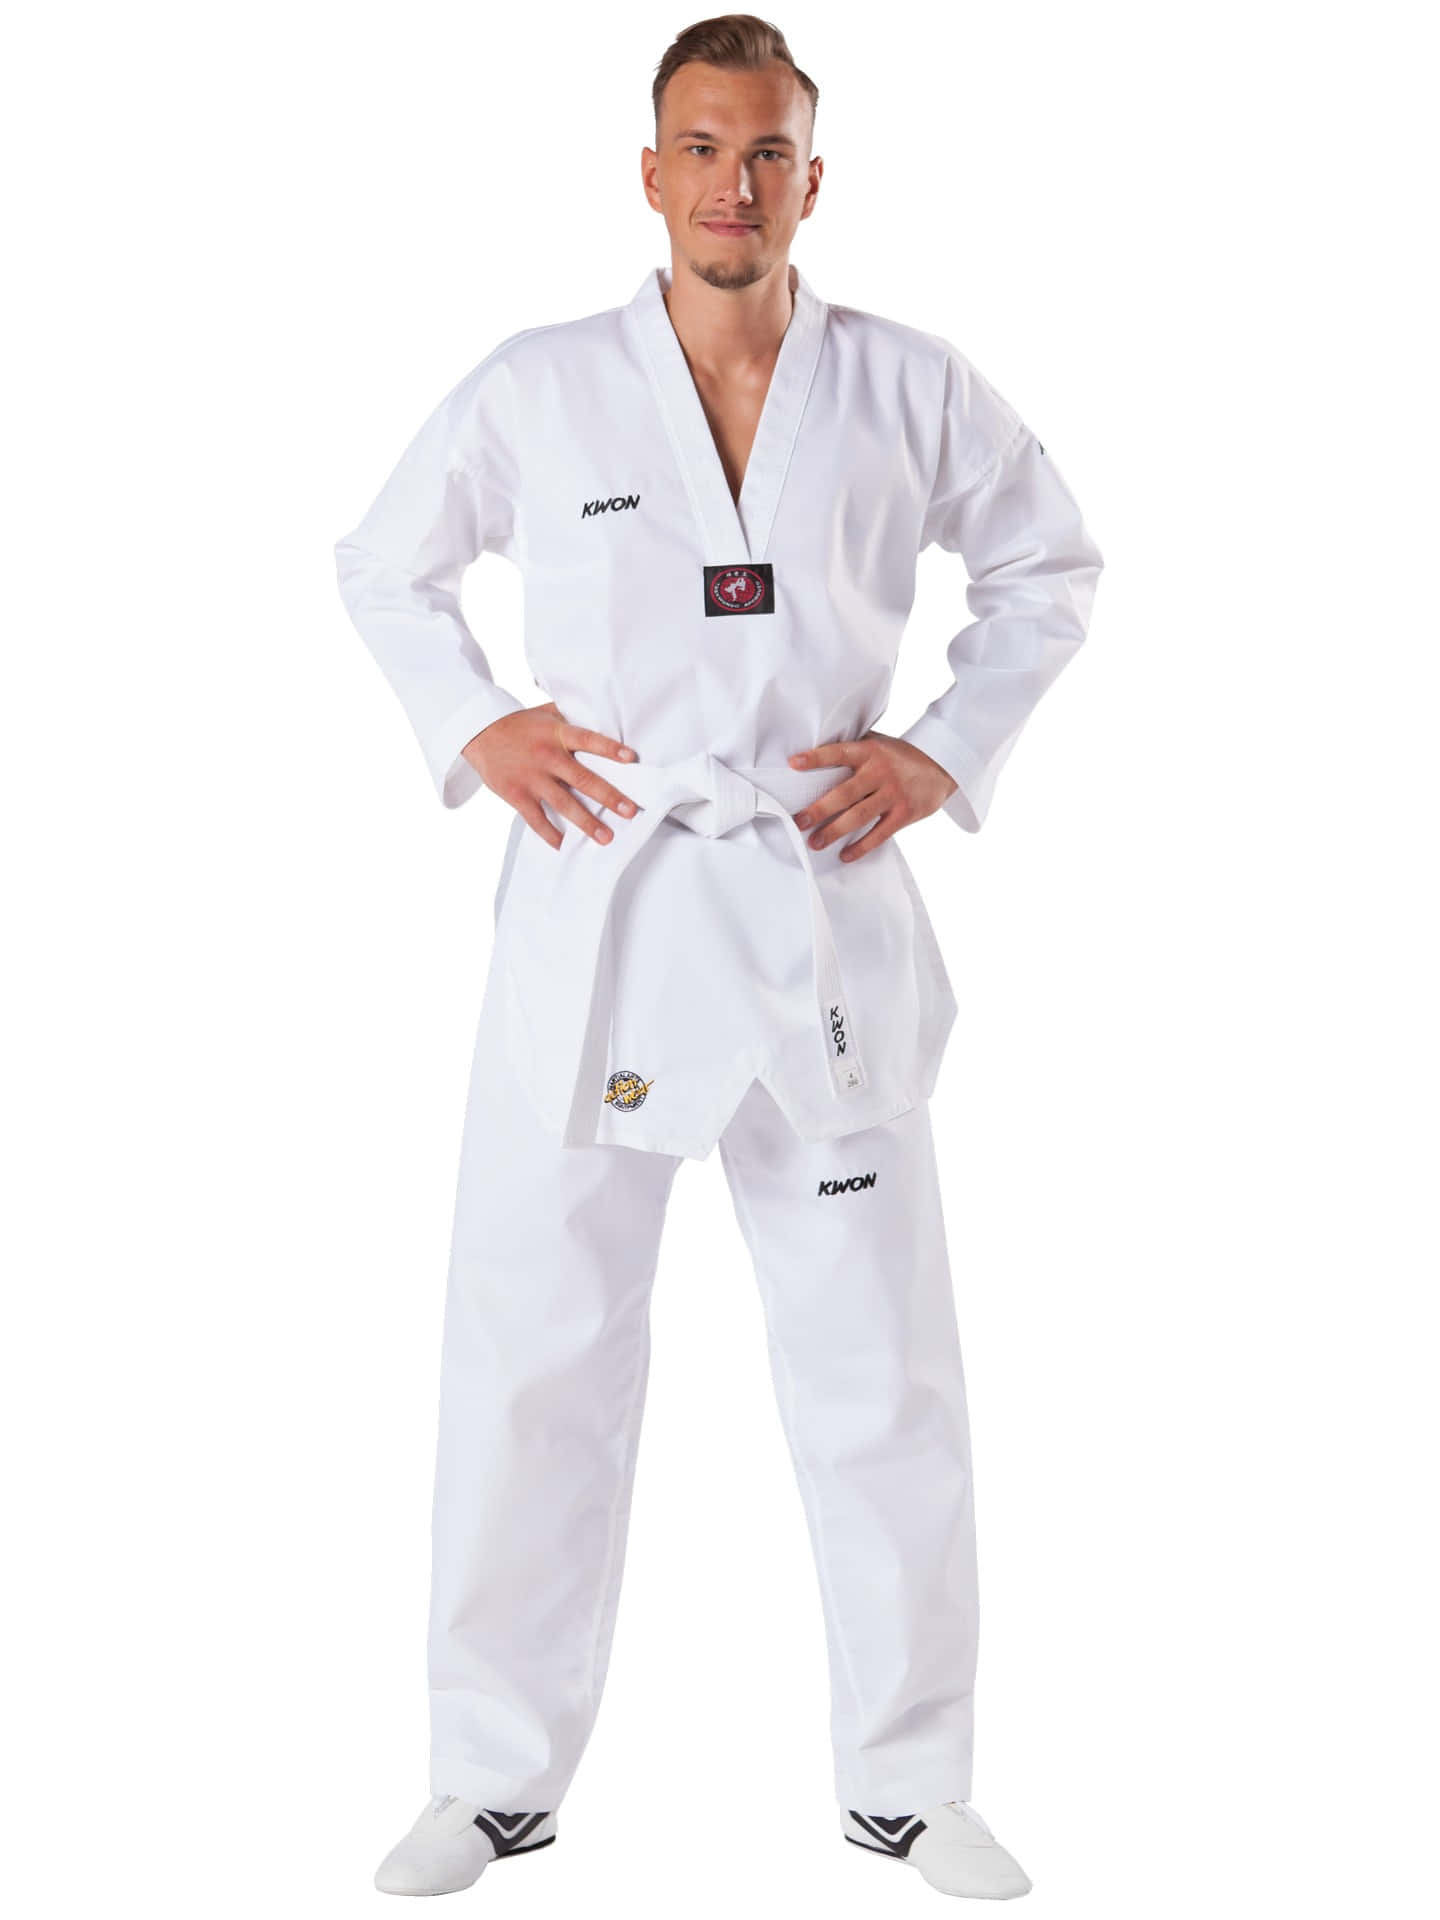 A young martial artist wearing a traditional Taekwondo uniform Wallpaper